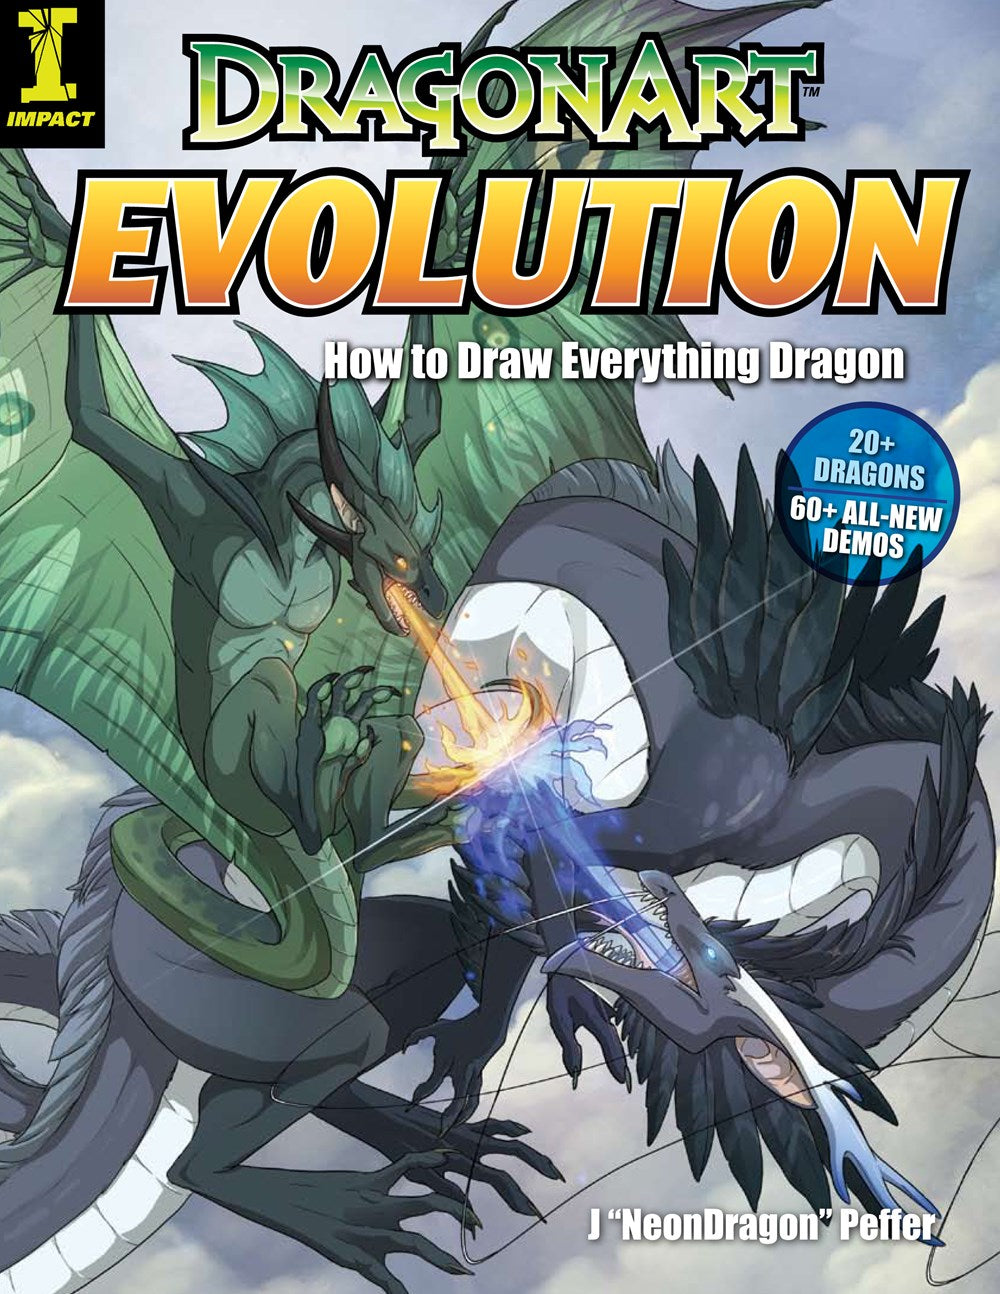 DragonArt Evolution